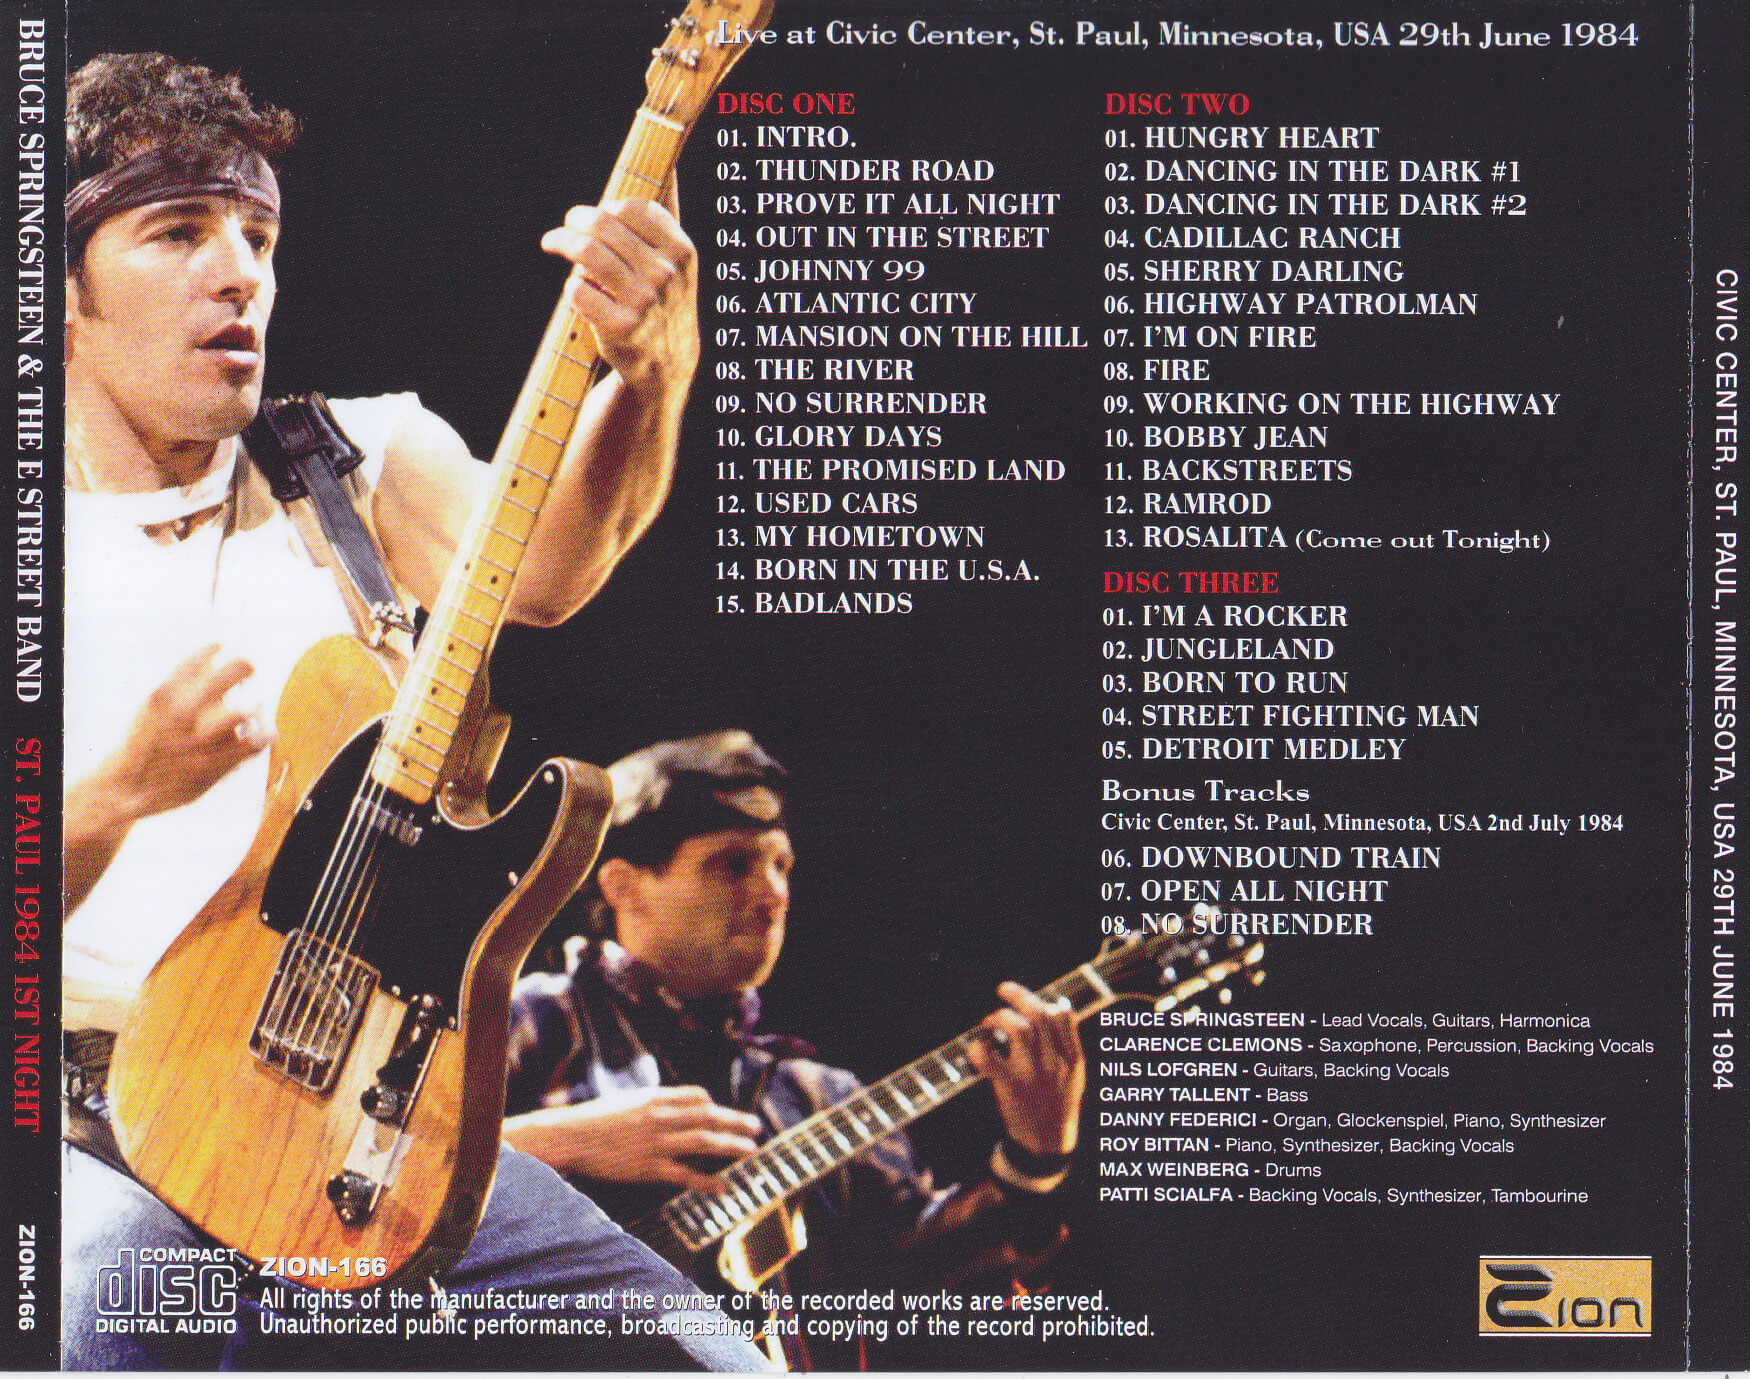 Bruce Springsteen & The E Street Band / St Paul 1984 1st Night